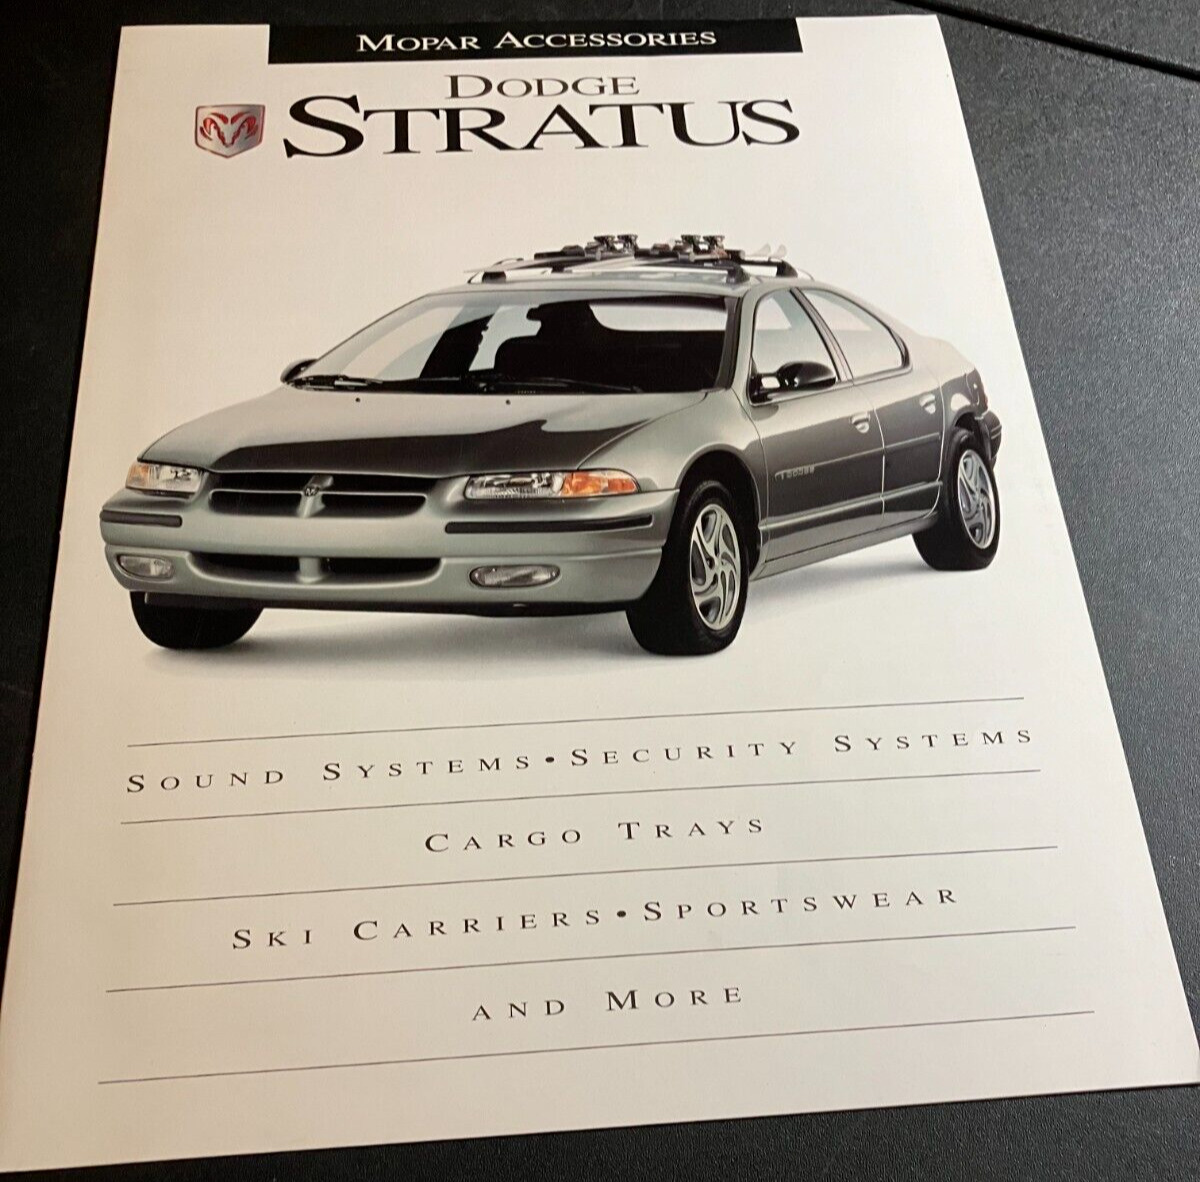 1994 Dodge Stratus Accessories by Mopar - Vintage 2-Page Dealer Sales Brochure